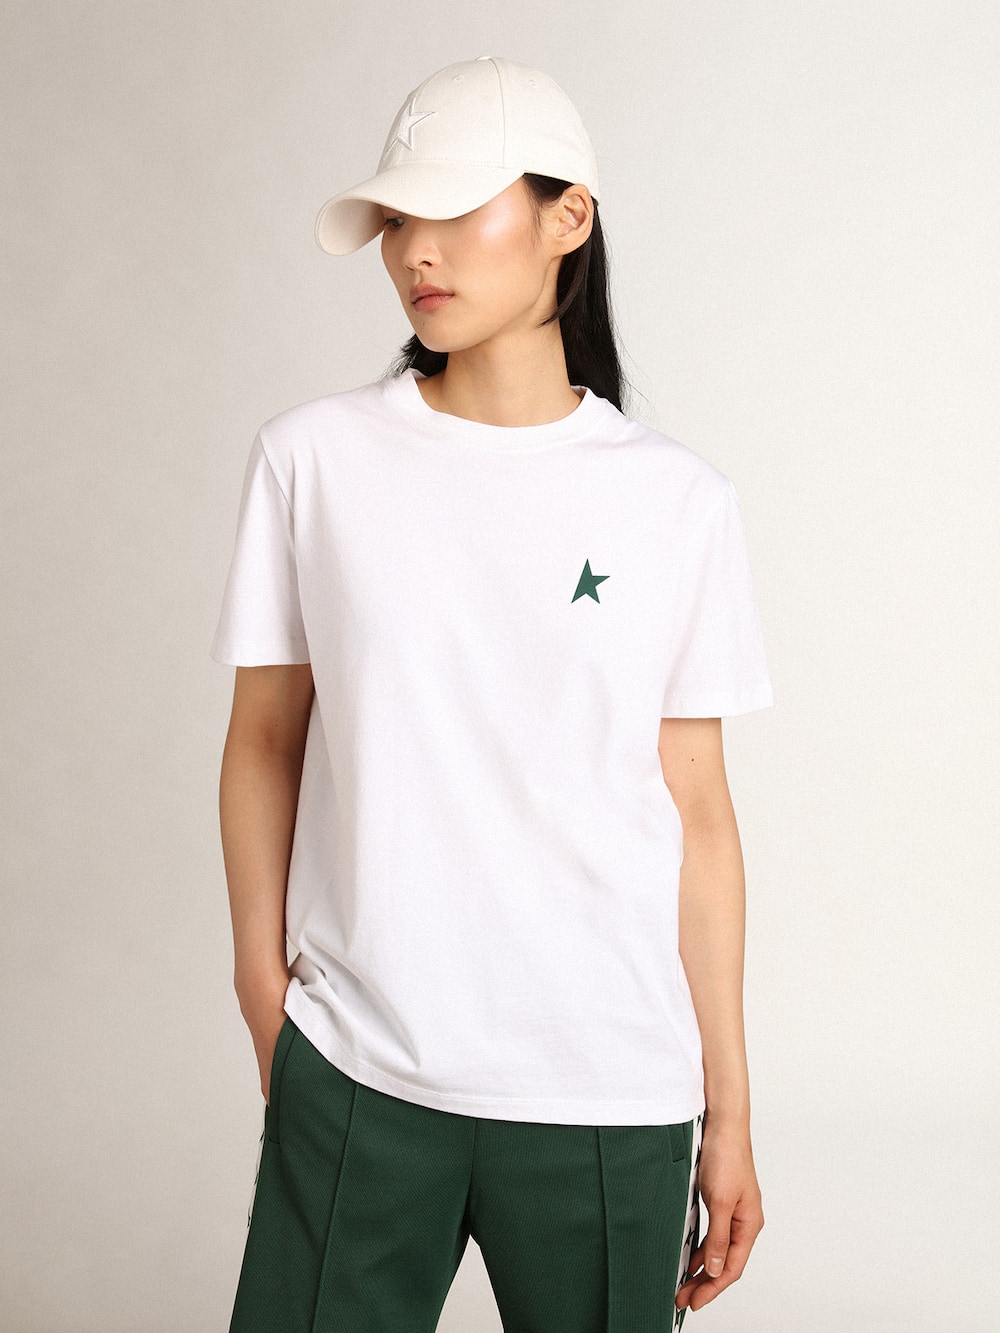 Golden Goose - T-shirt bianca da donna con stella verde sul davanti in 